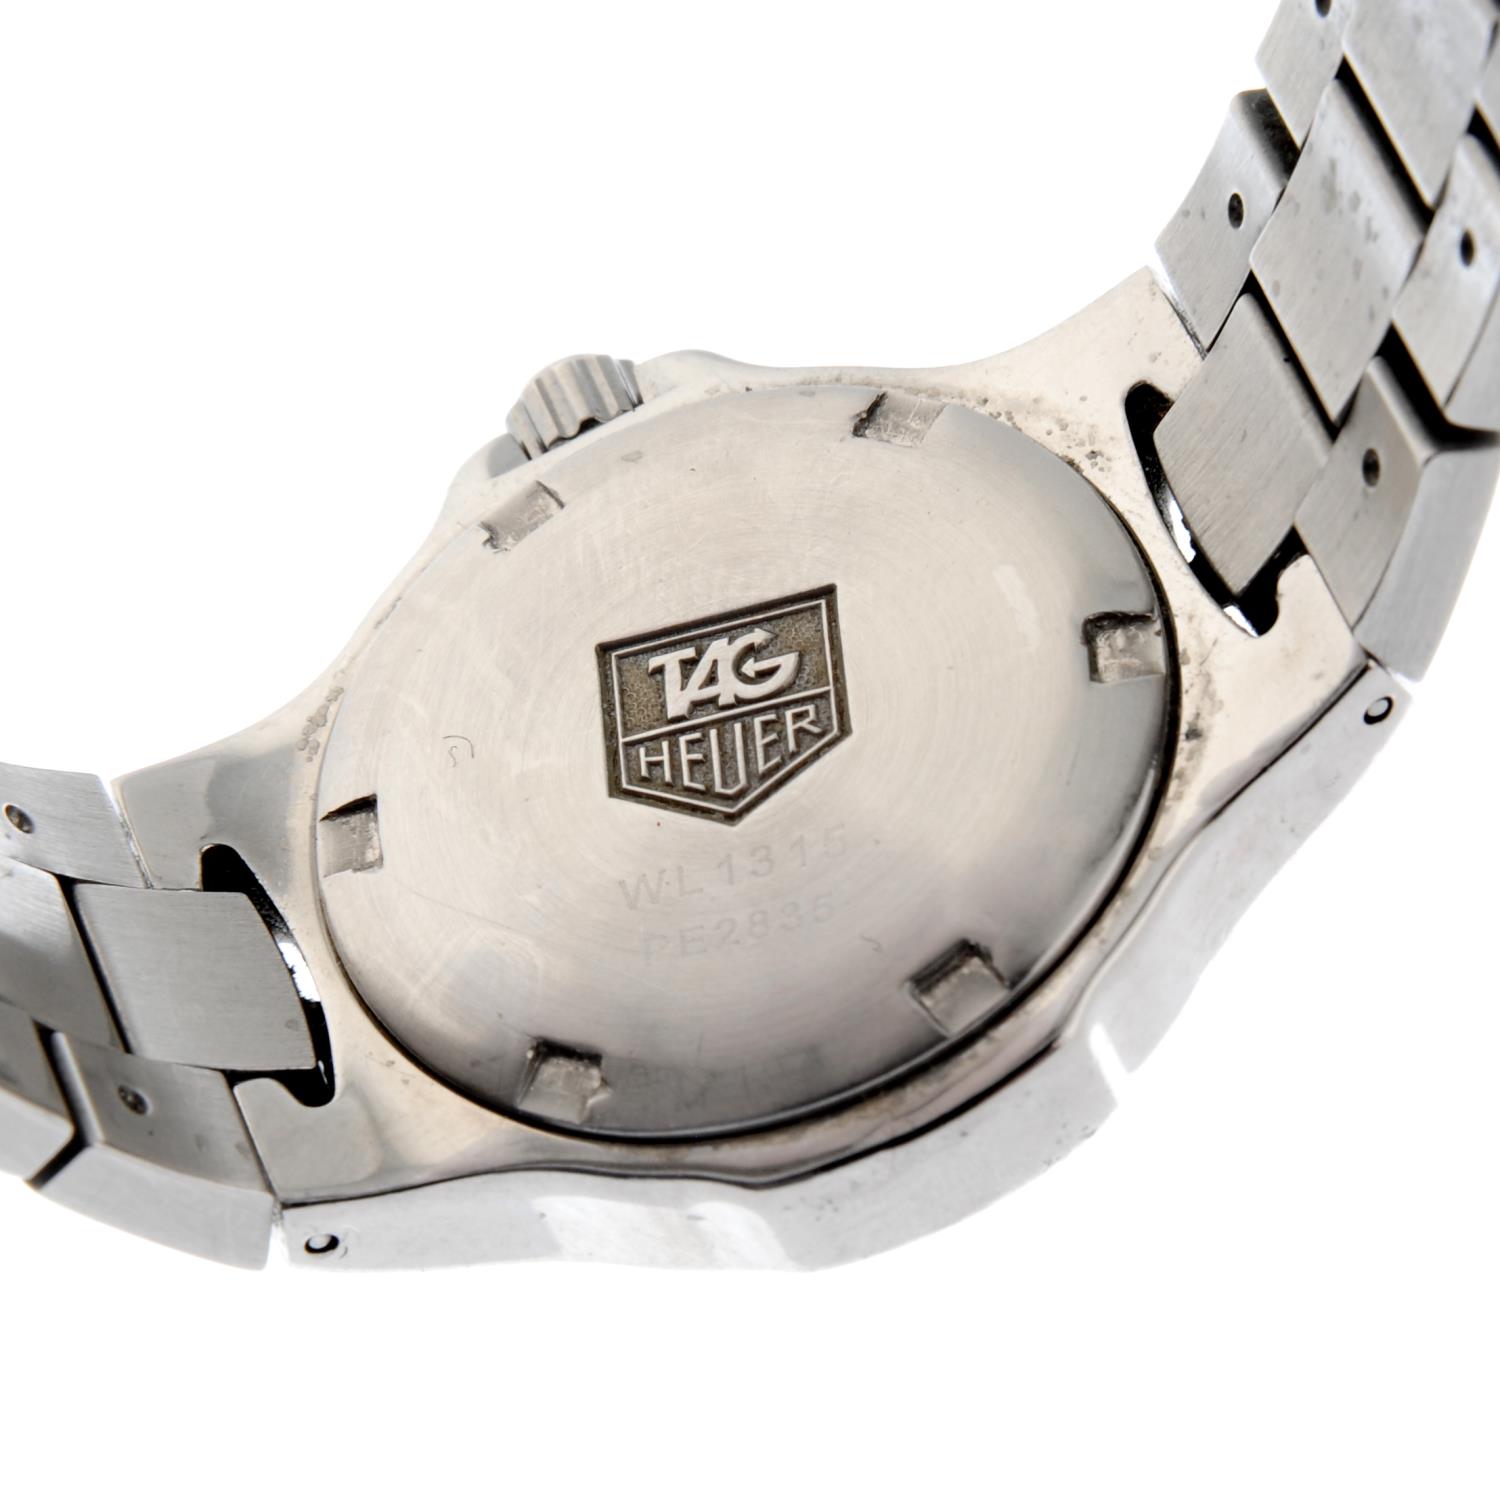 TAG HEUER - a Kirium bracelet watch. - Image 4 of 4